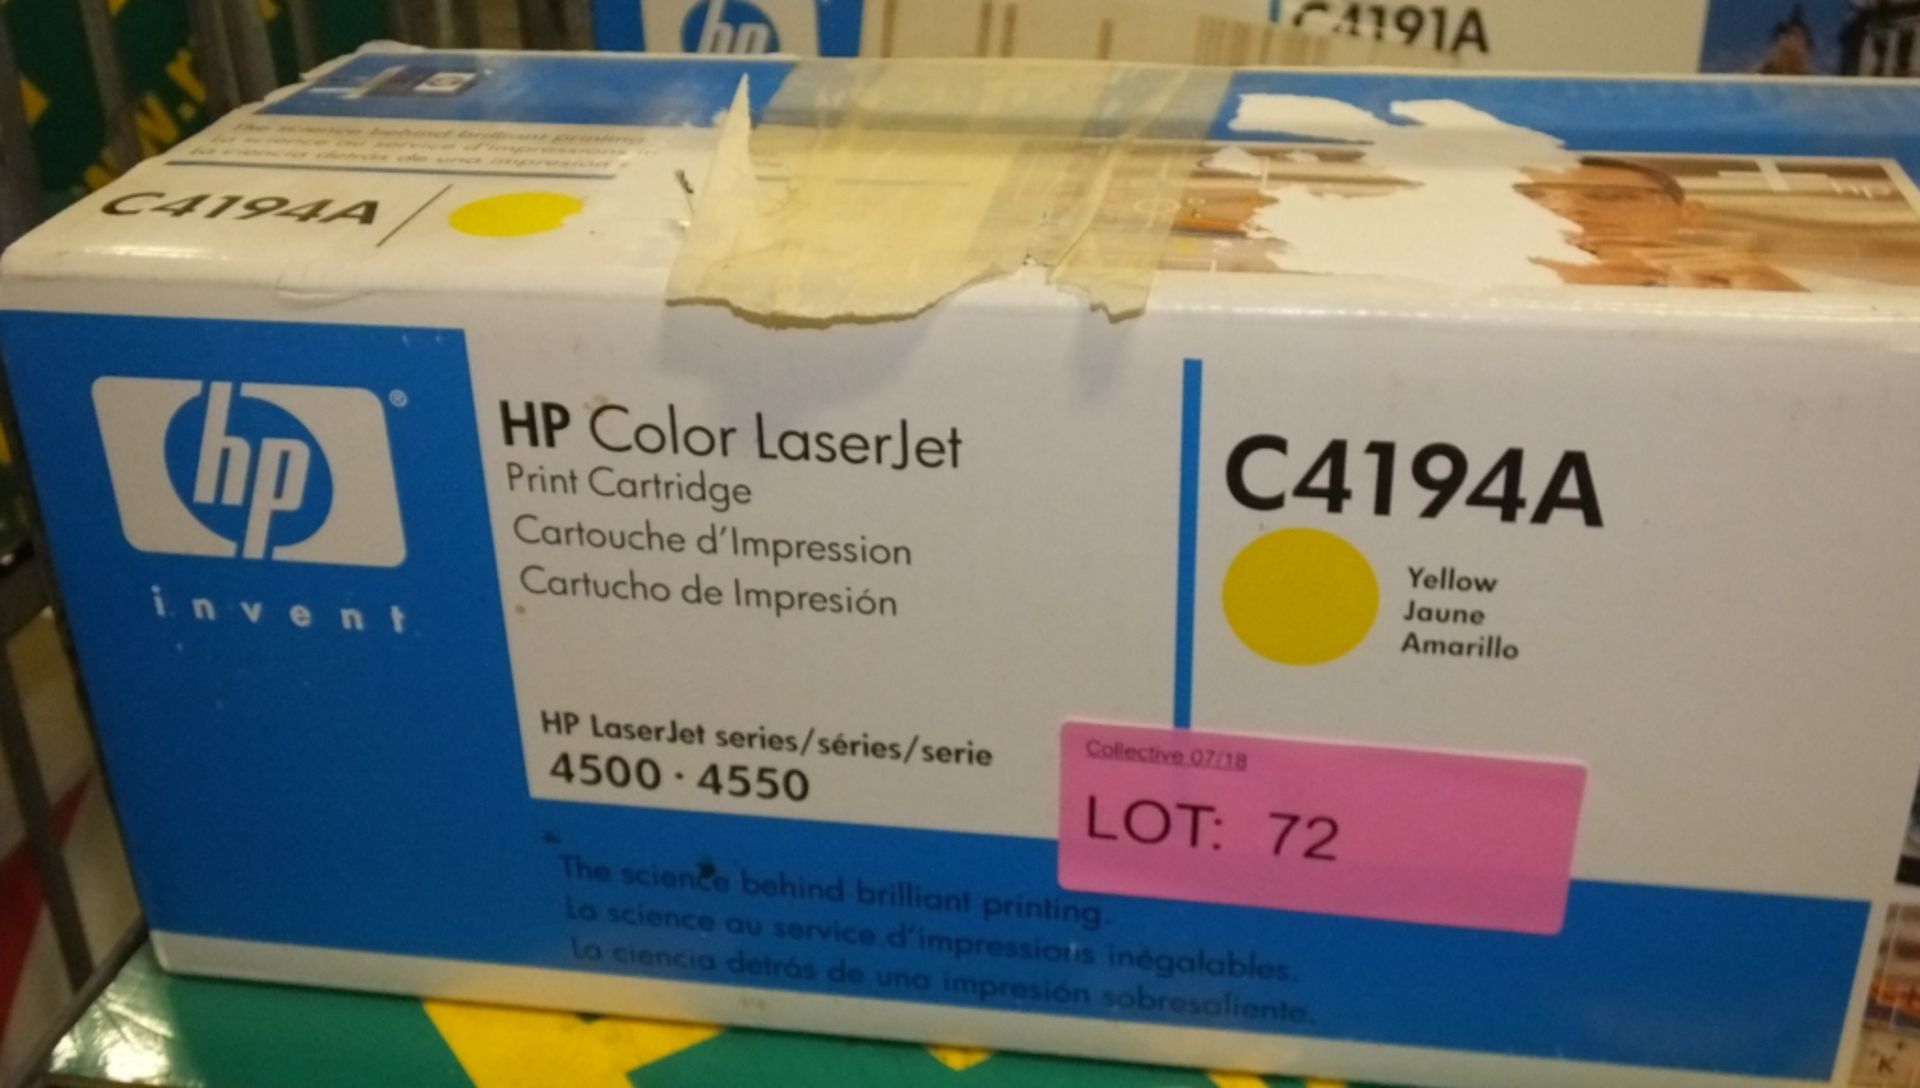 HP Color Laserjet Cartridges - C4191A - 1x Yellow, 1x Black - Image 2 of 2